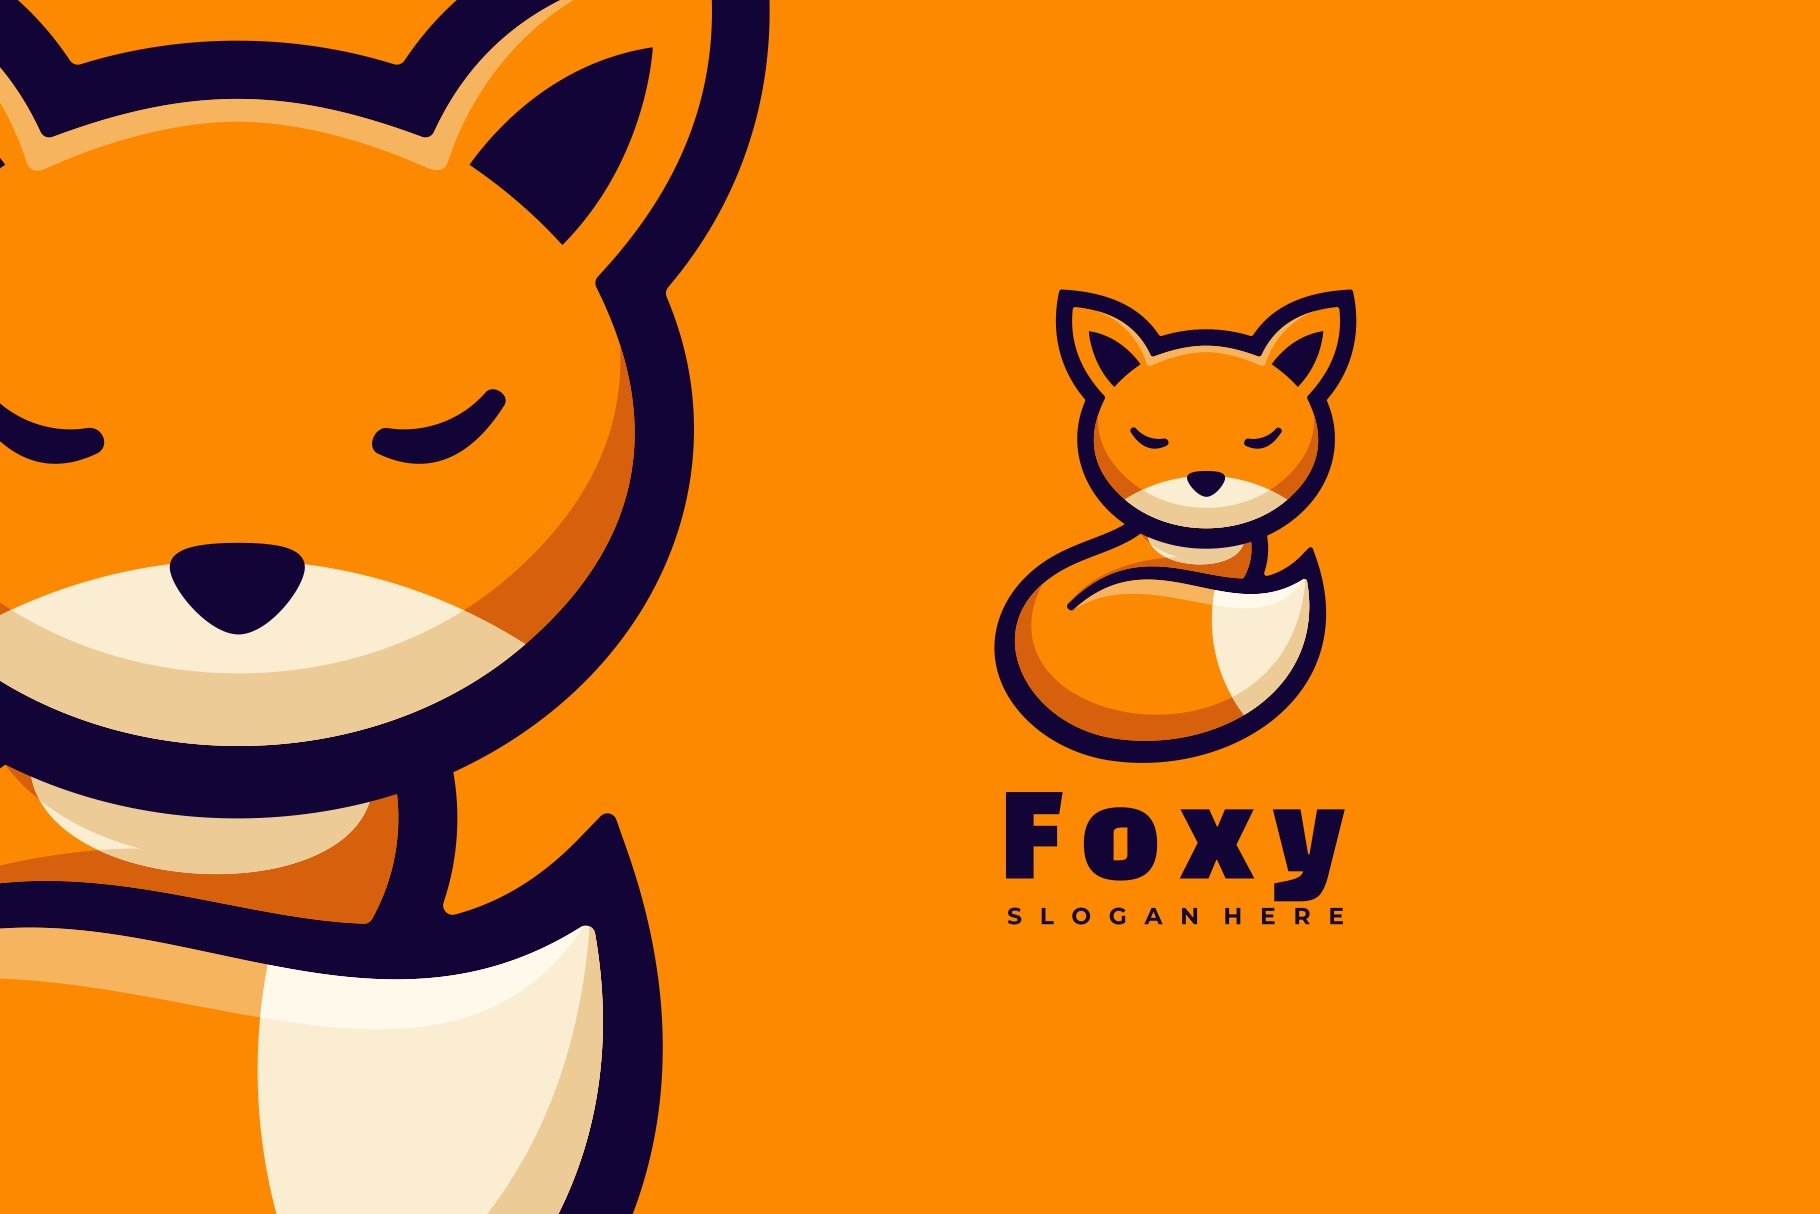 Fox Mascot Cartoon Logo cover image.